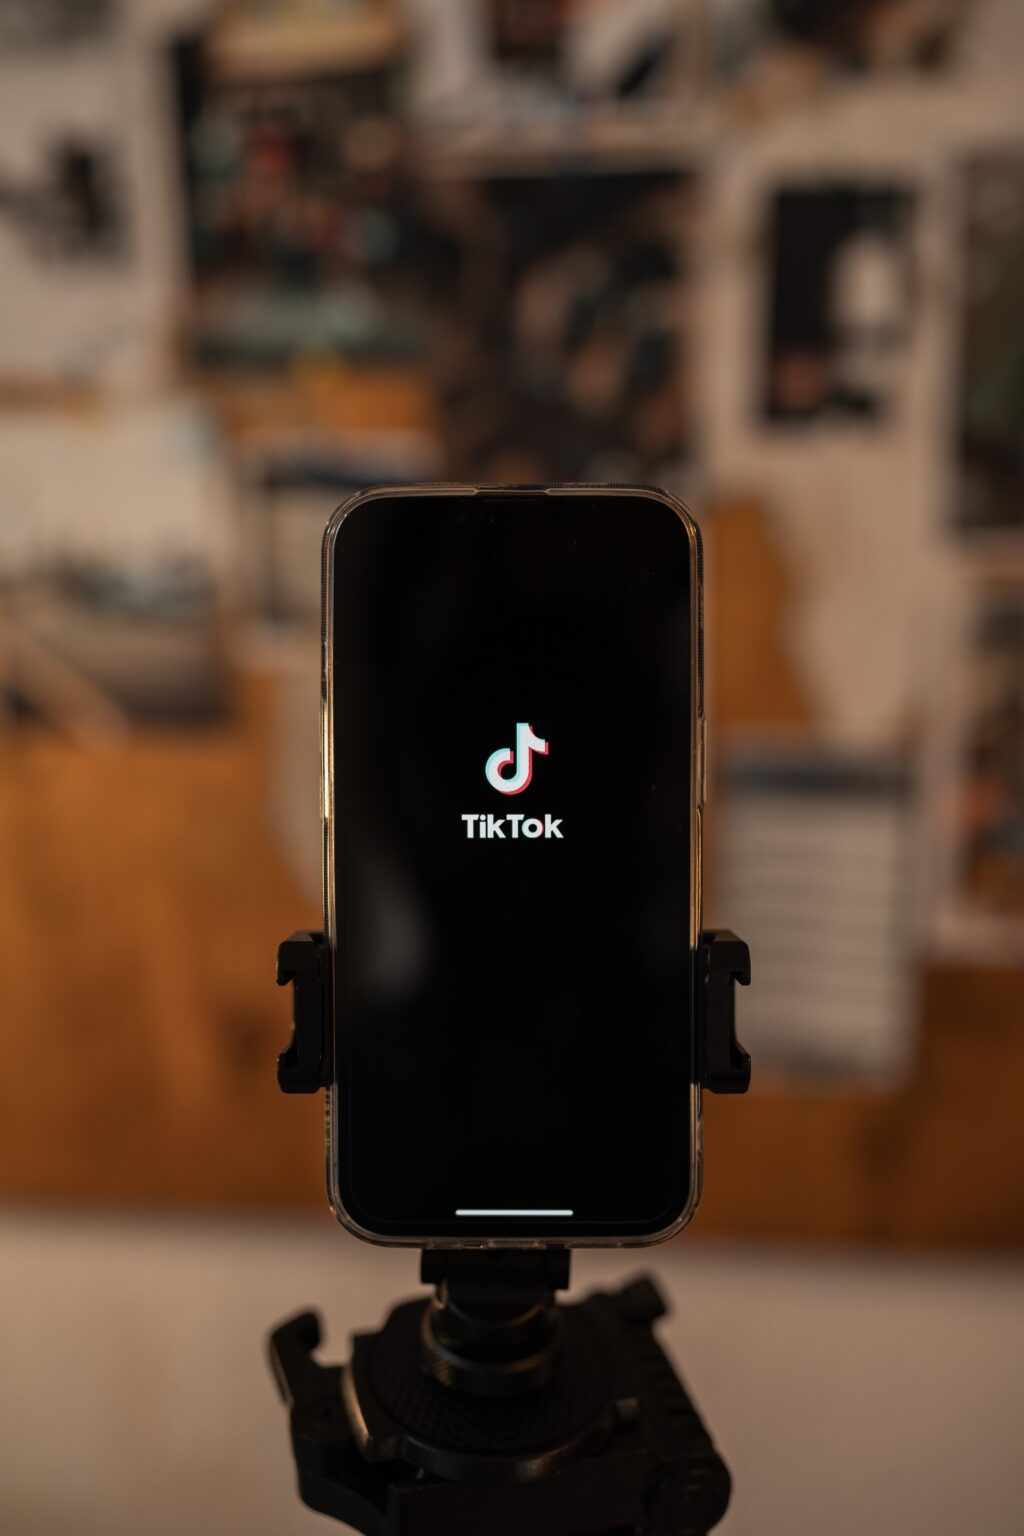 Tendance Digitale : Téléphone qui ouvre TikTok